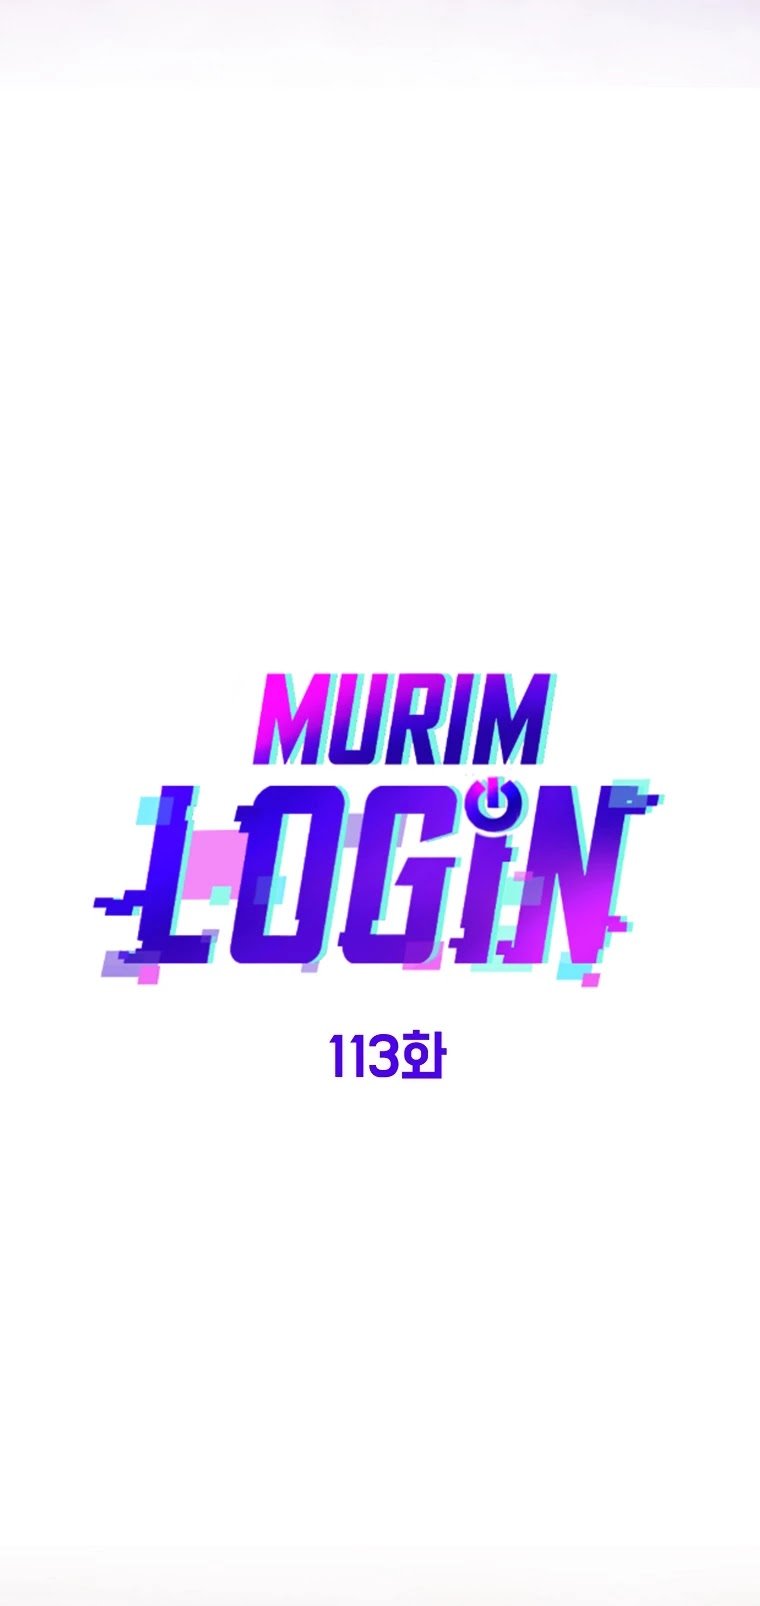 murim login chapter